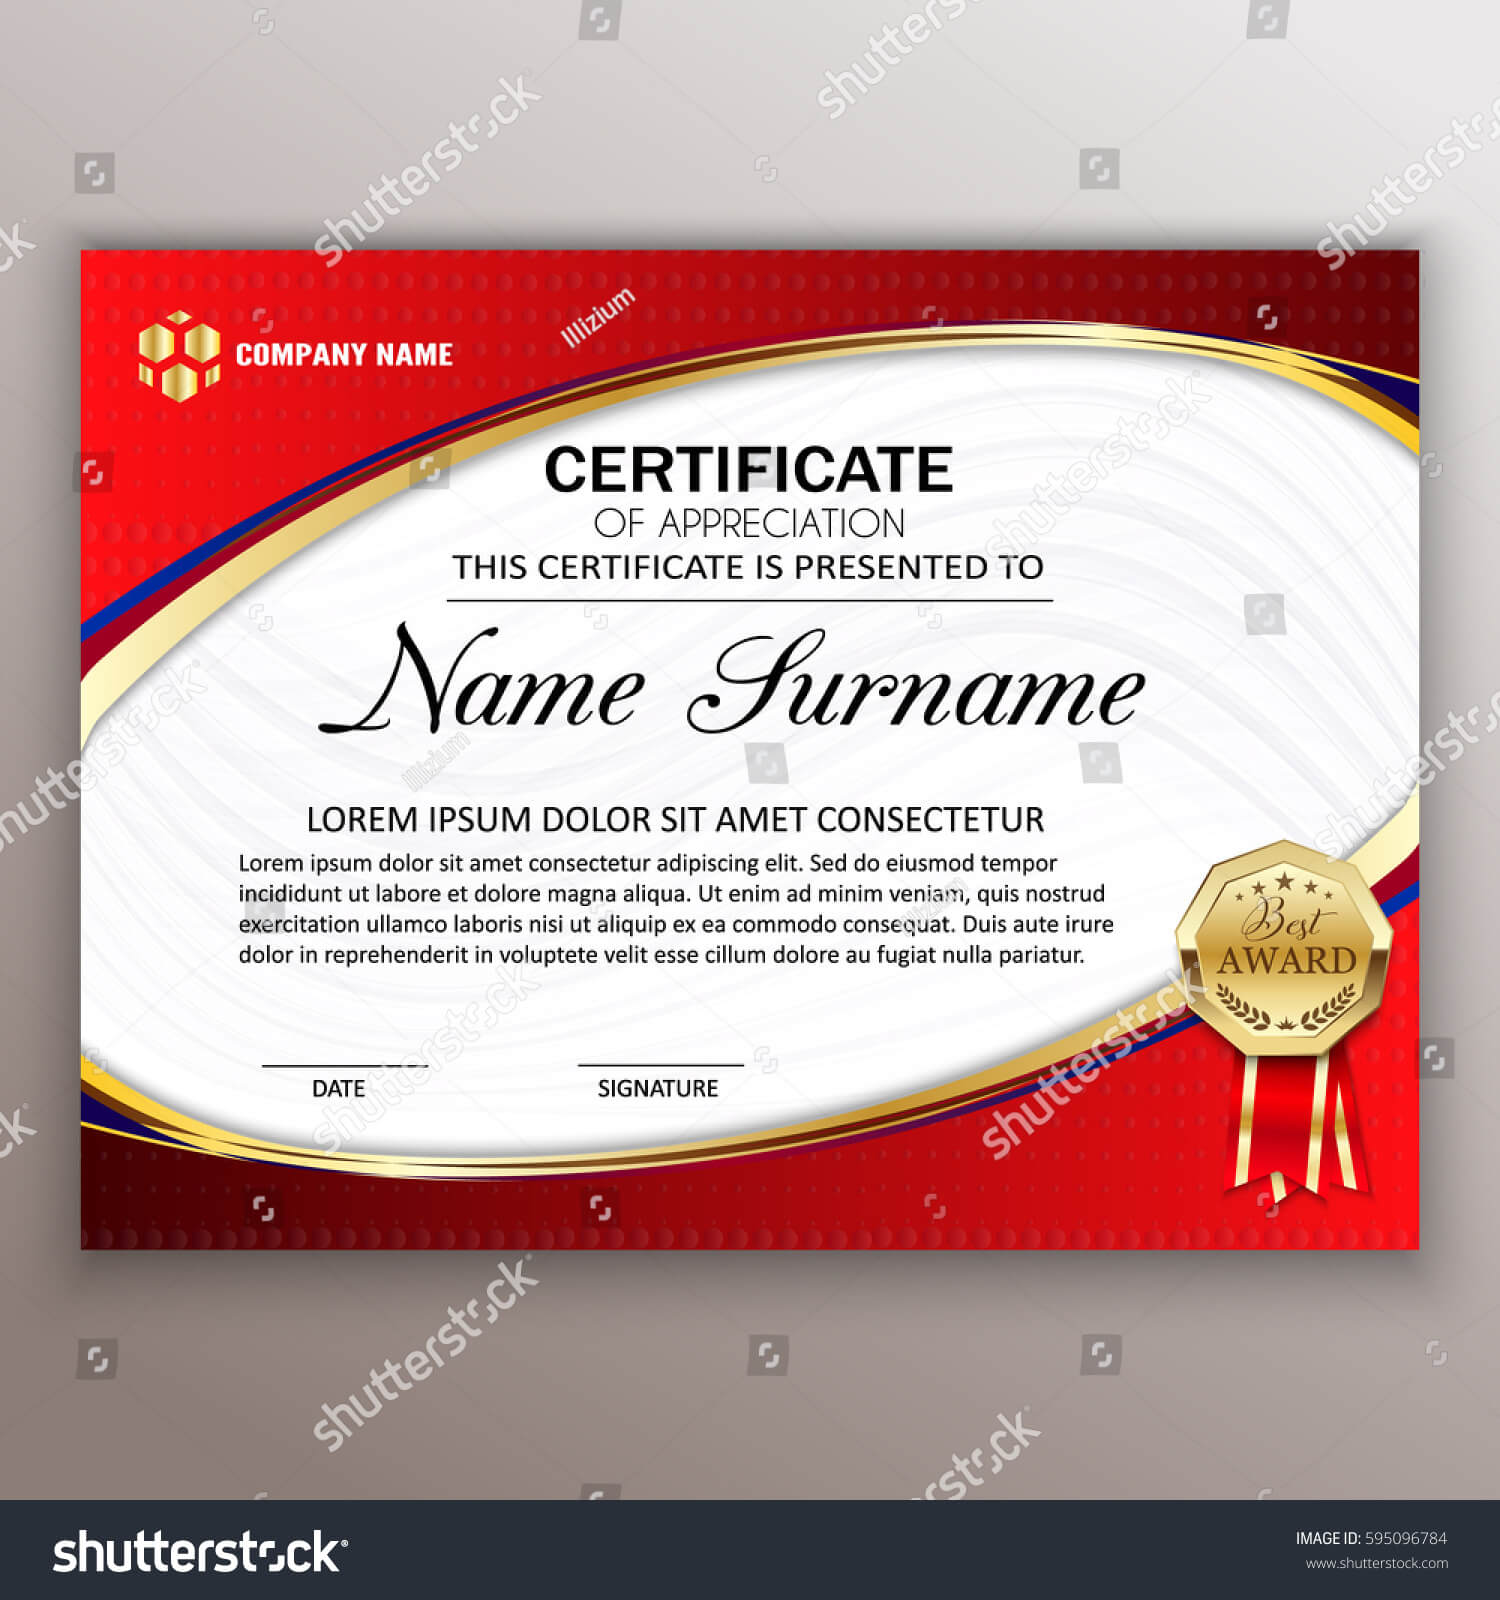 Beautiful Certificate Templates] – 28 Images – 33 Psd With Beautiful Certificate Templates